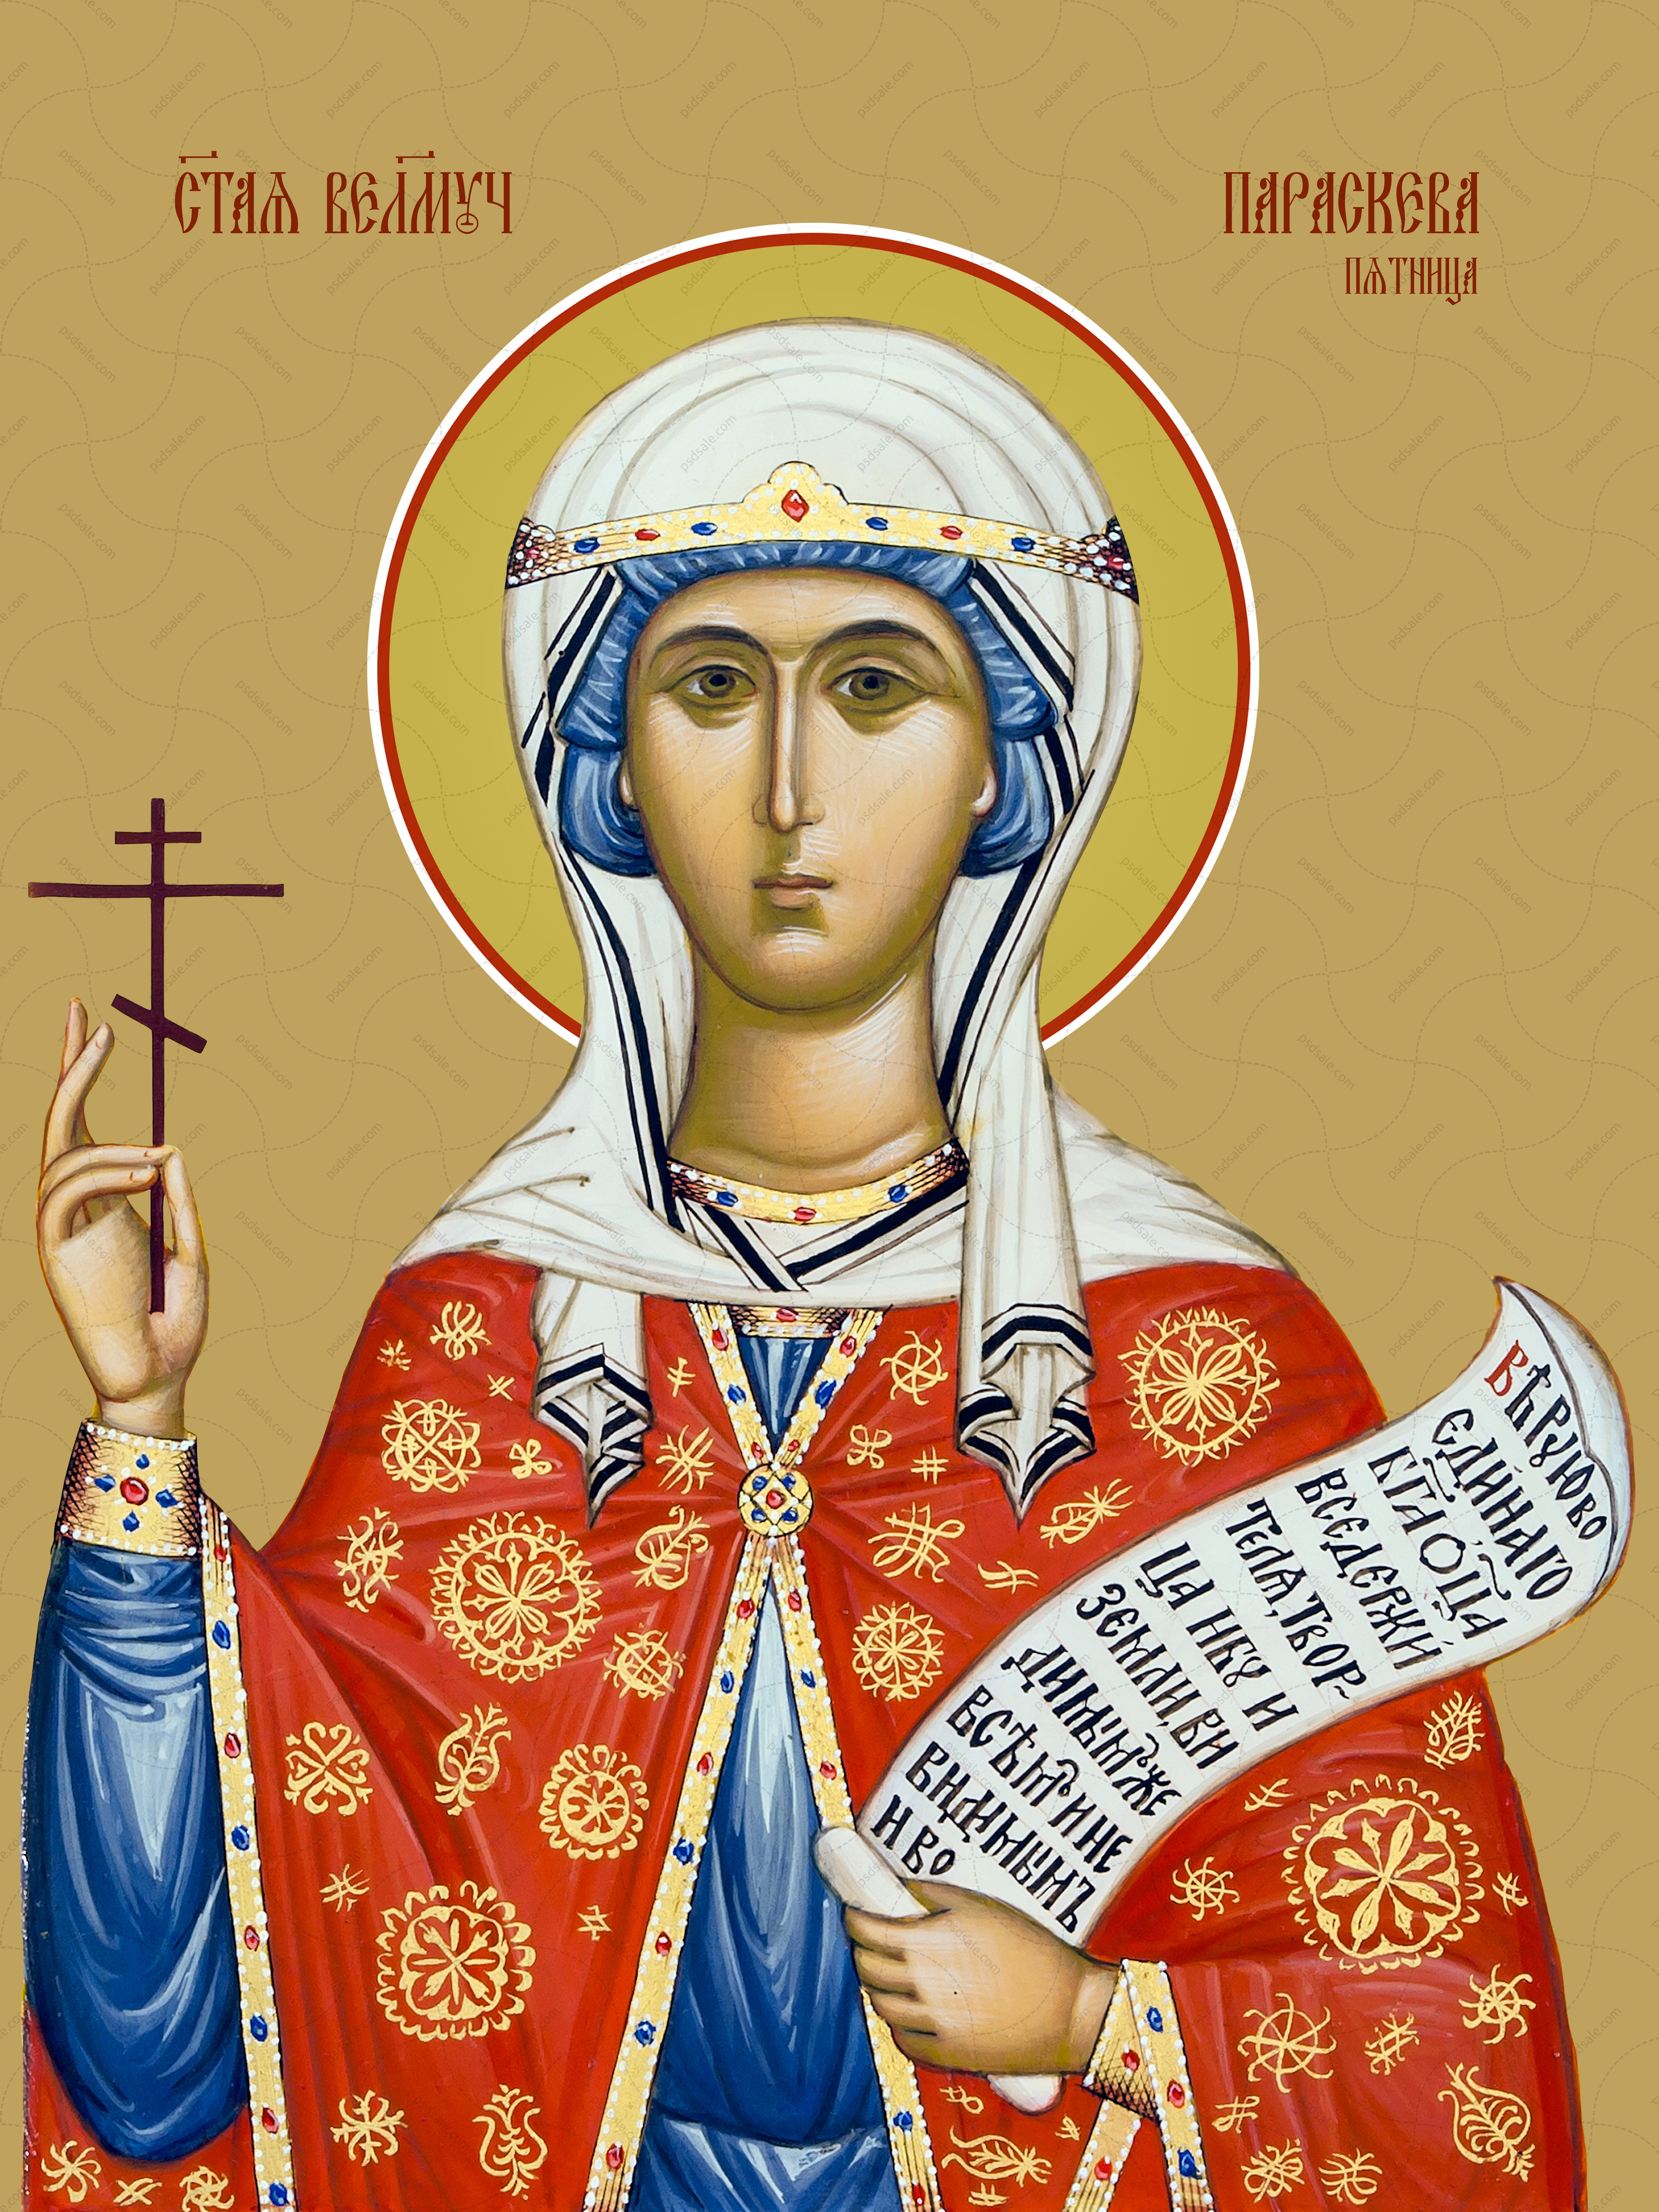 Paraskeva Friday, Holy Great Martyr